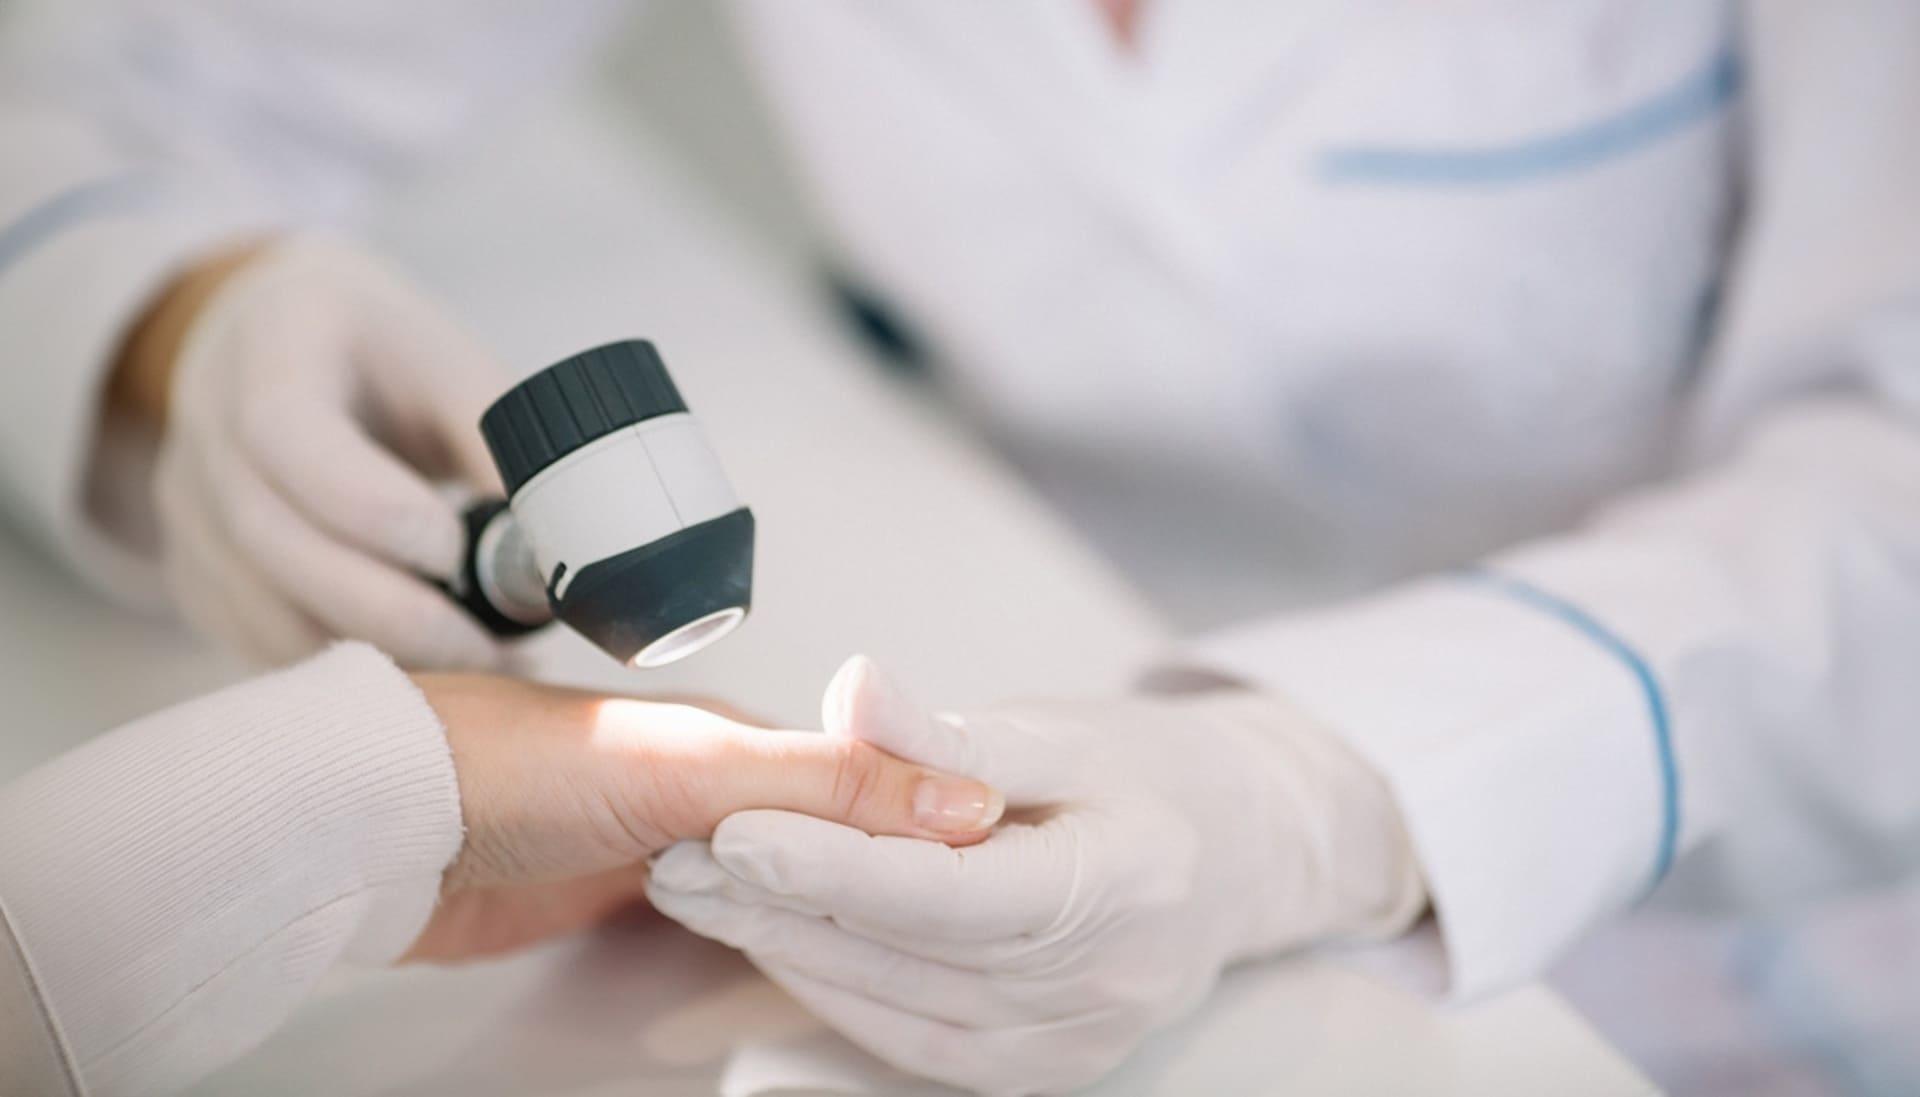 Dermatologista analisando manchas em unhas de paciente. -